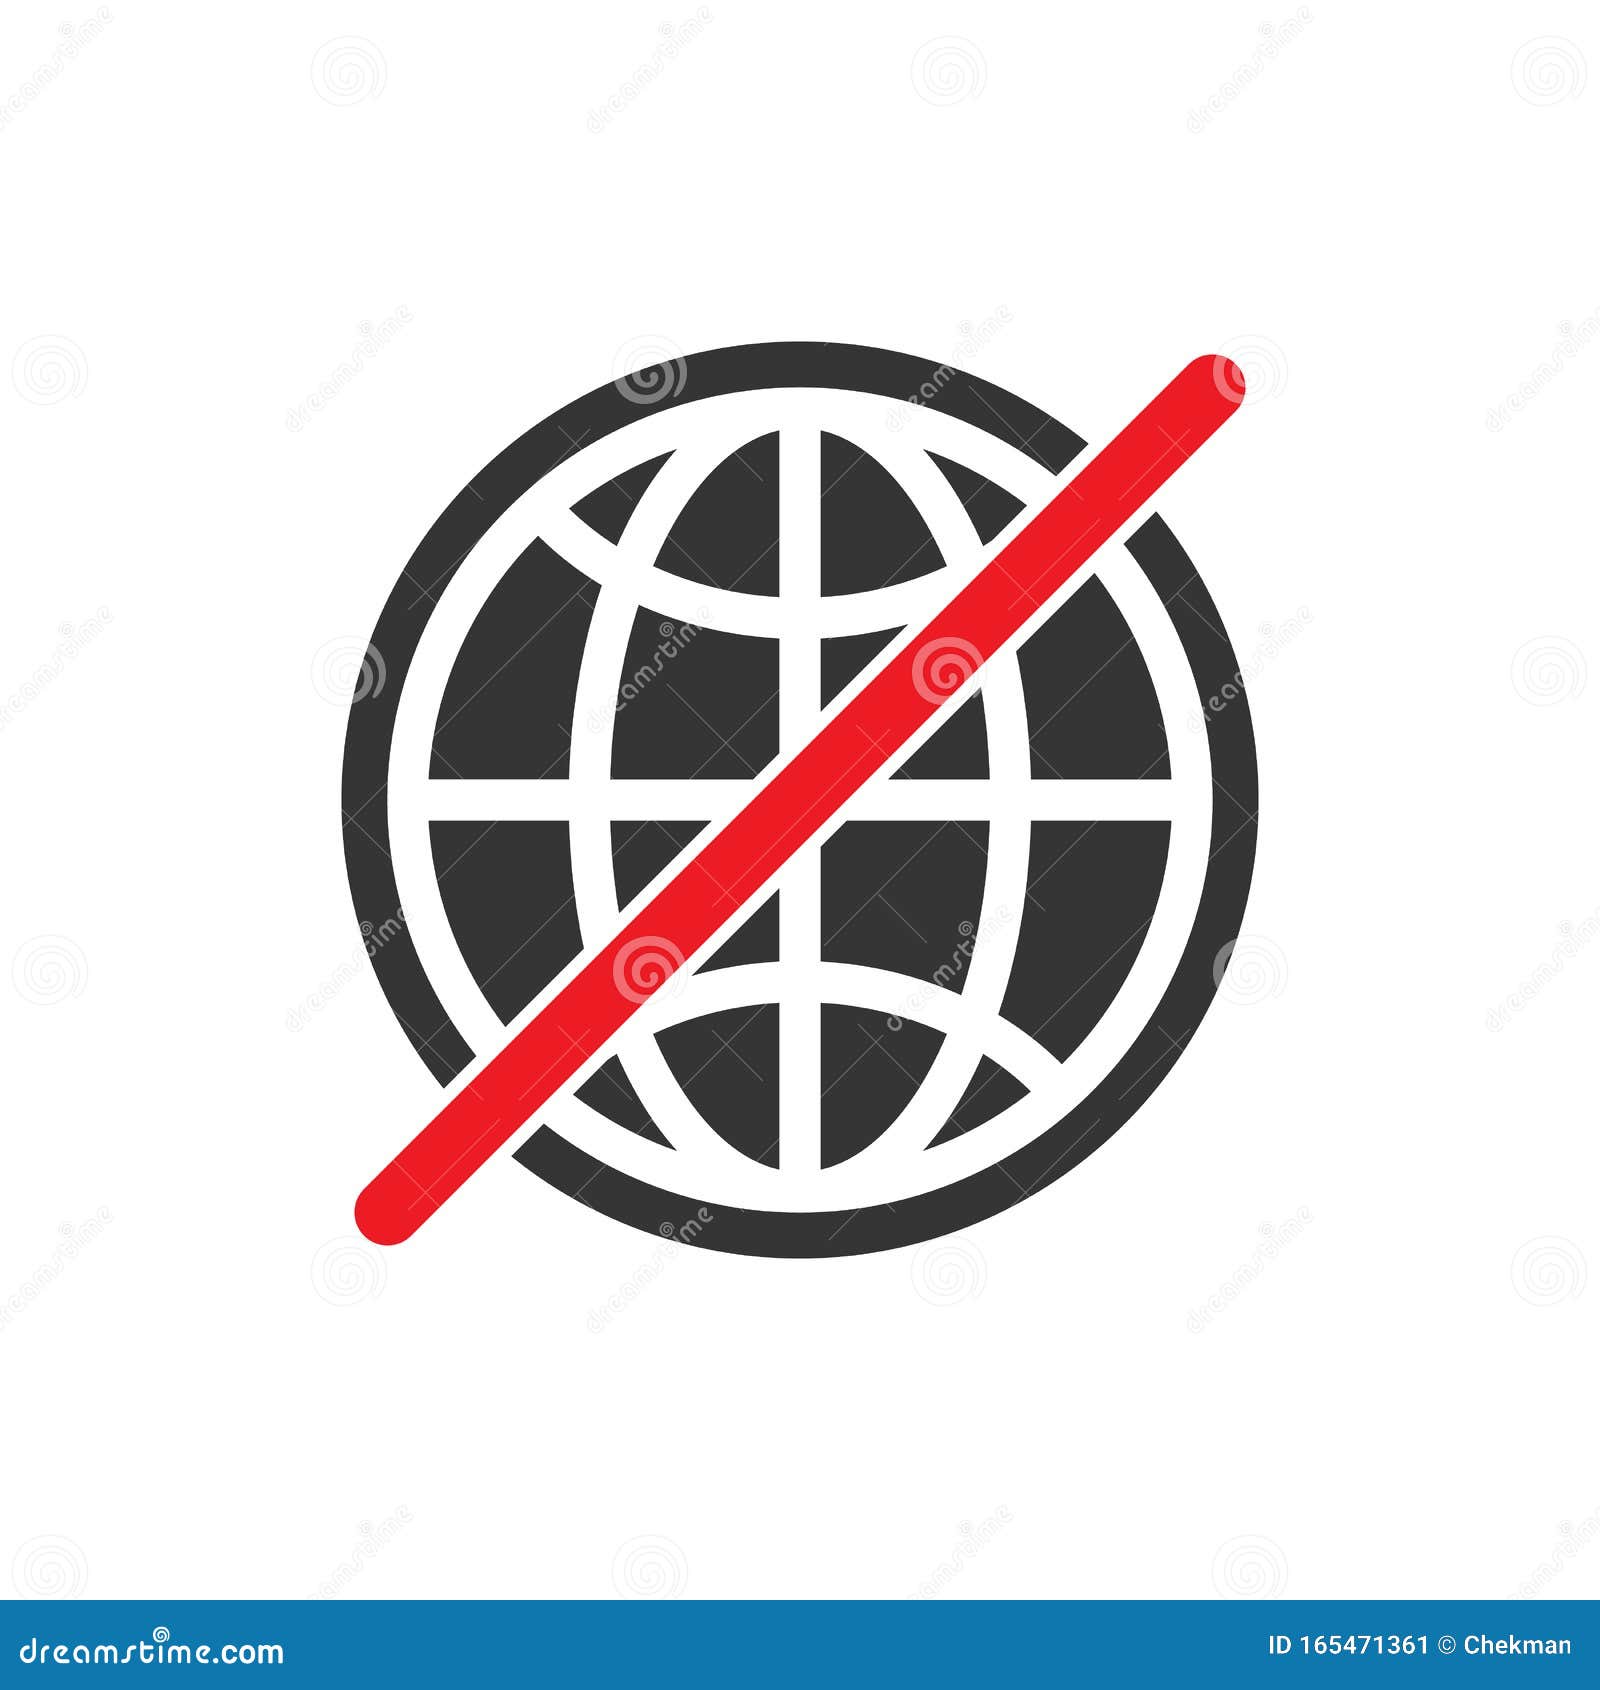 No Internet Connection Sign. No Globe Vector Icon Stock Illustration